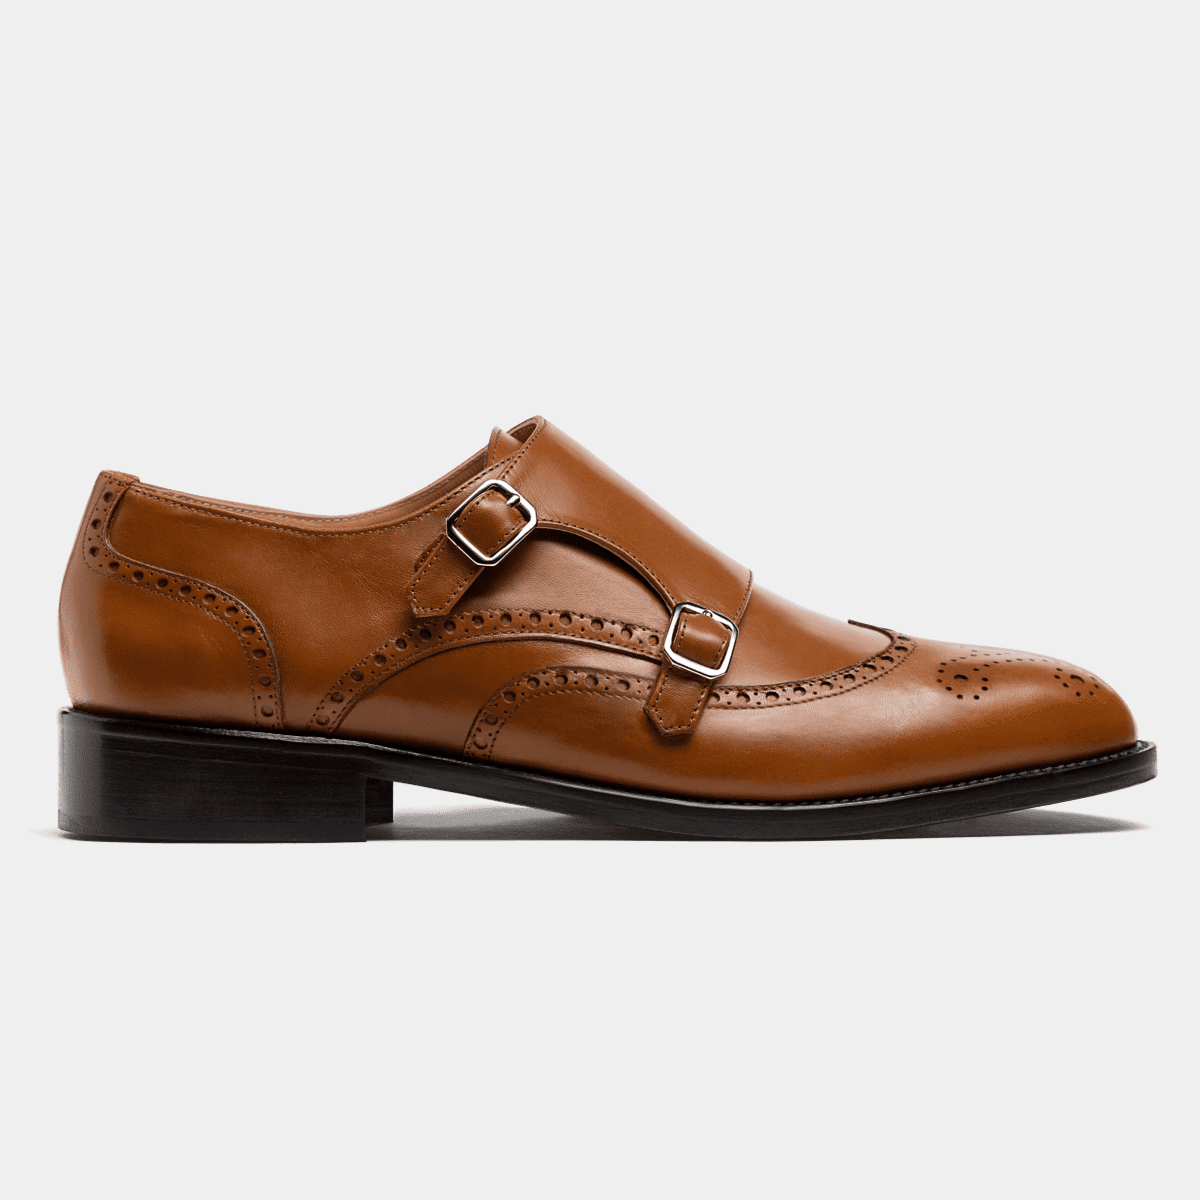 Monk Brogues - brown italian calf leather